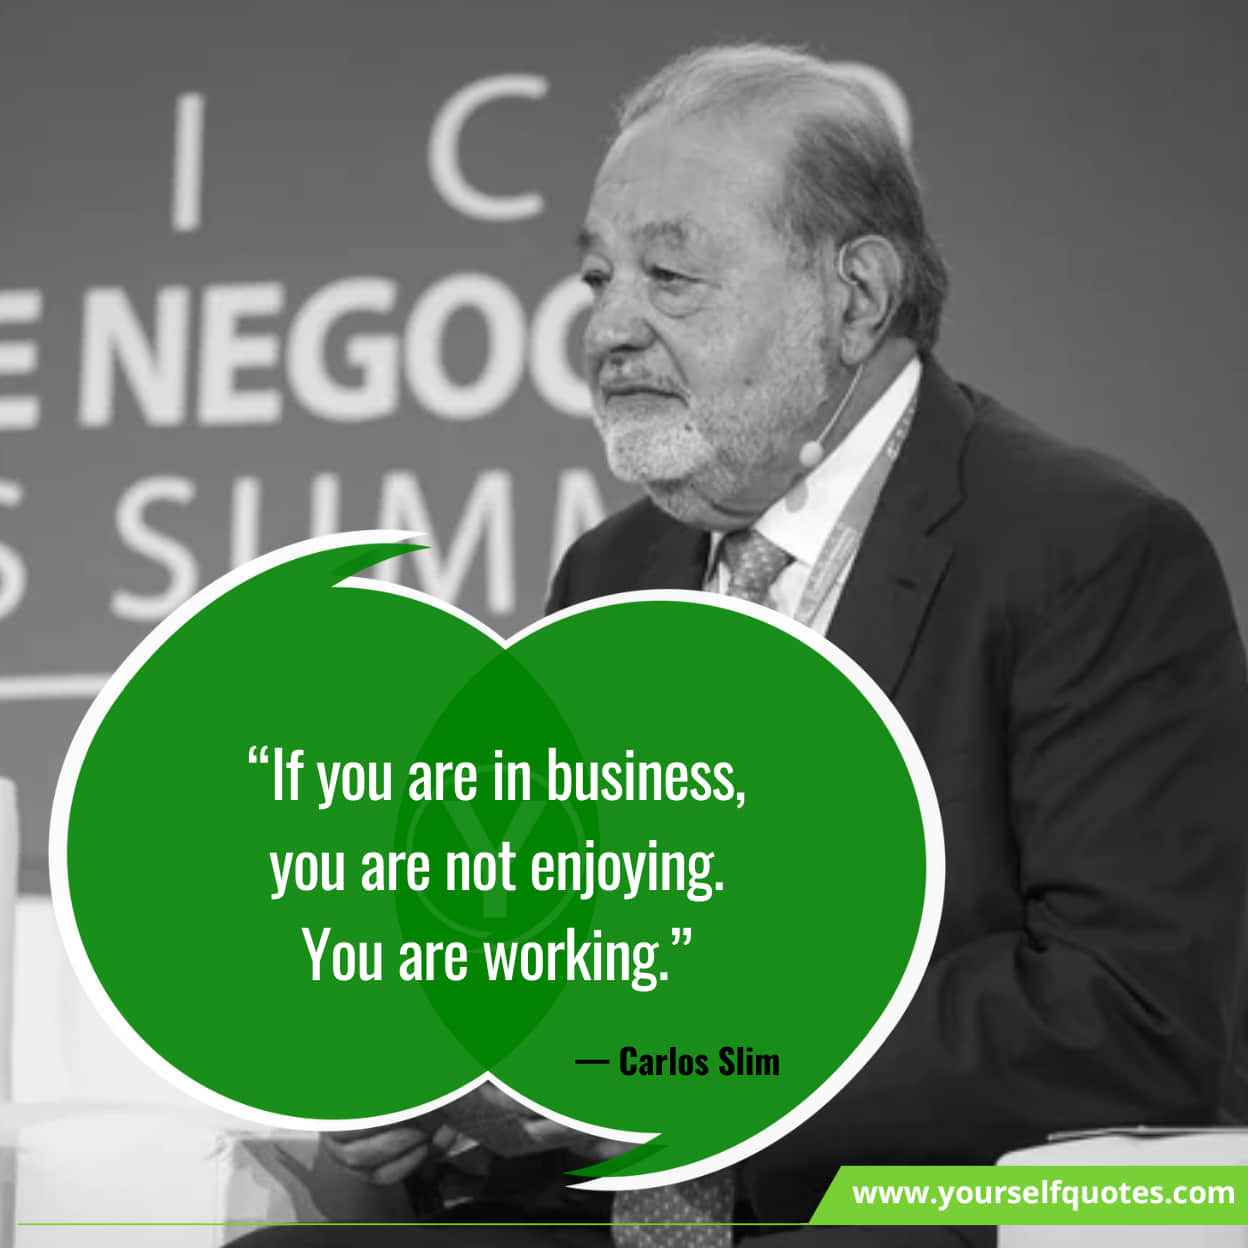 Carlos Slim Helu Quotes On Business